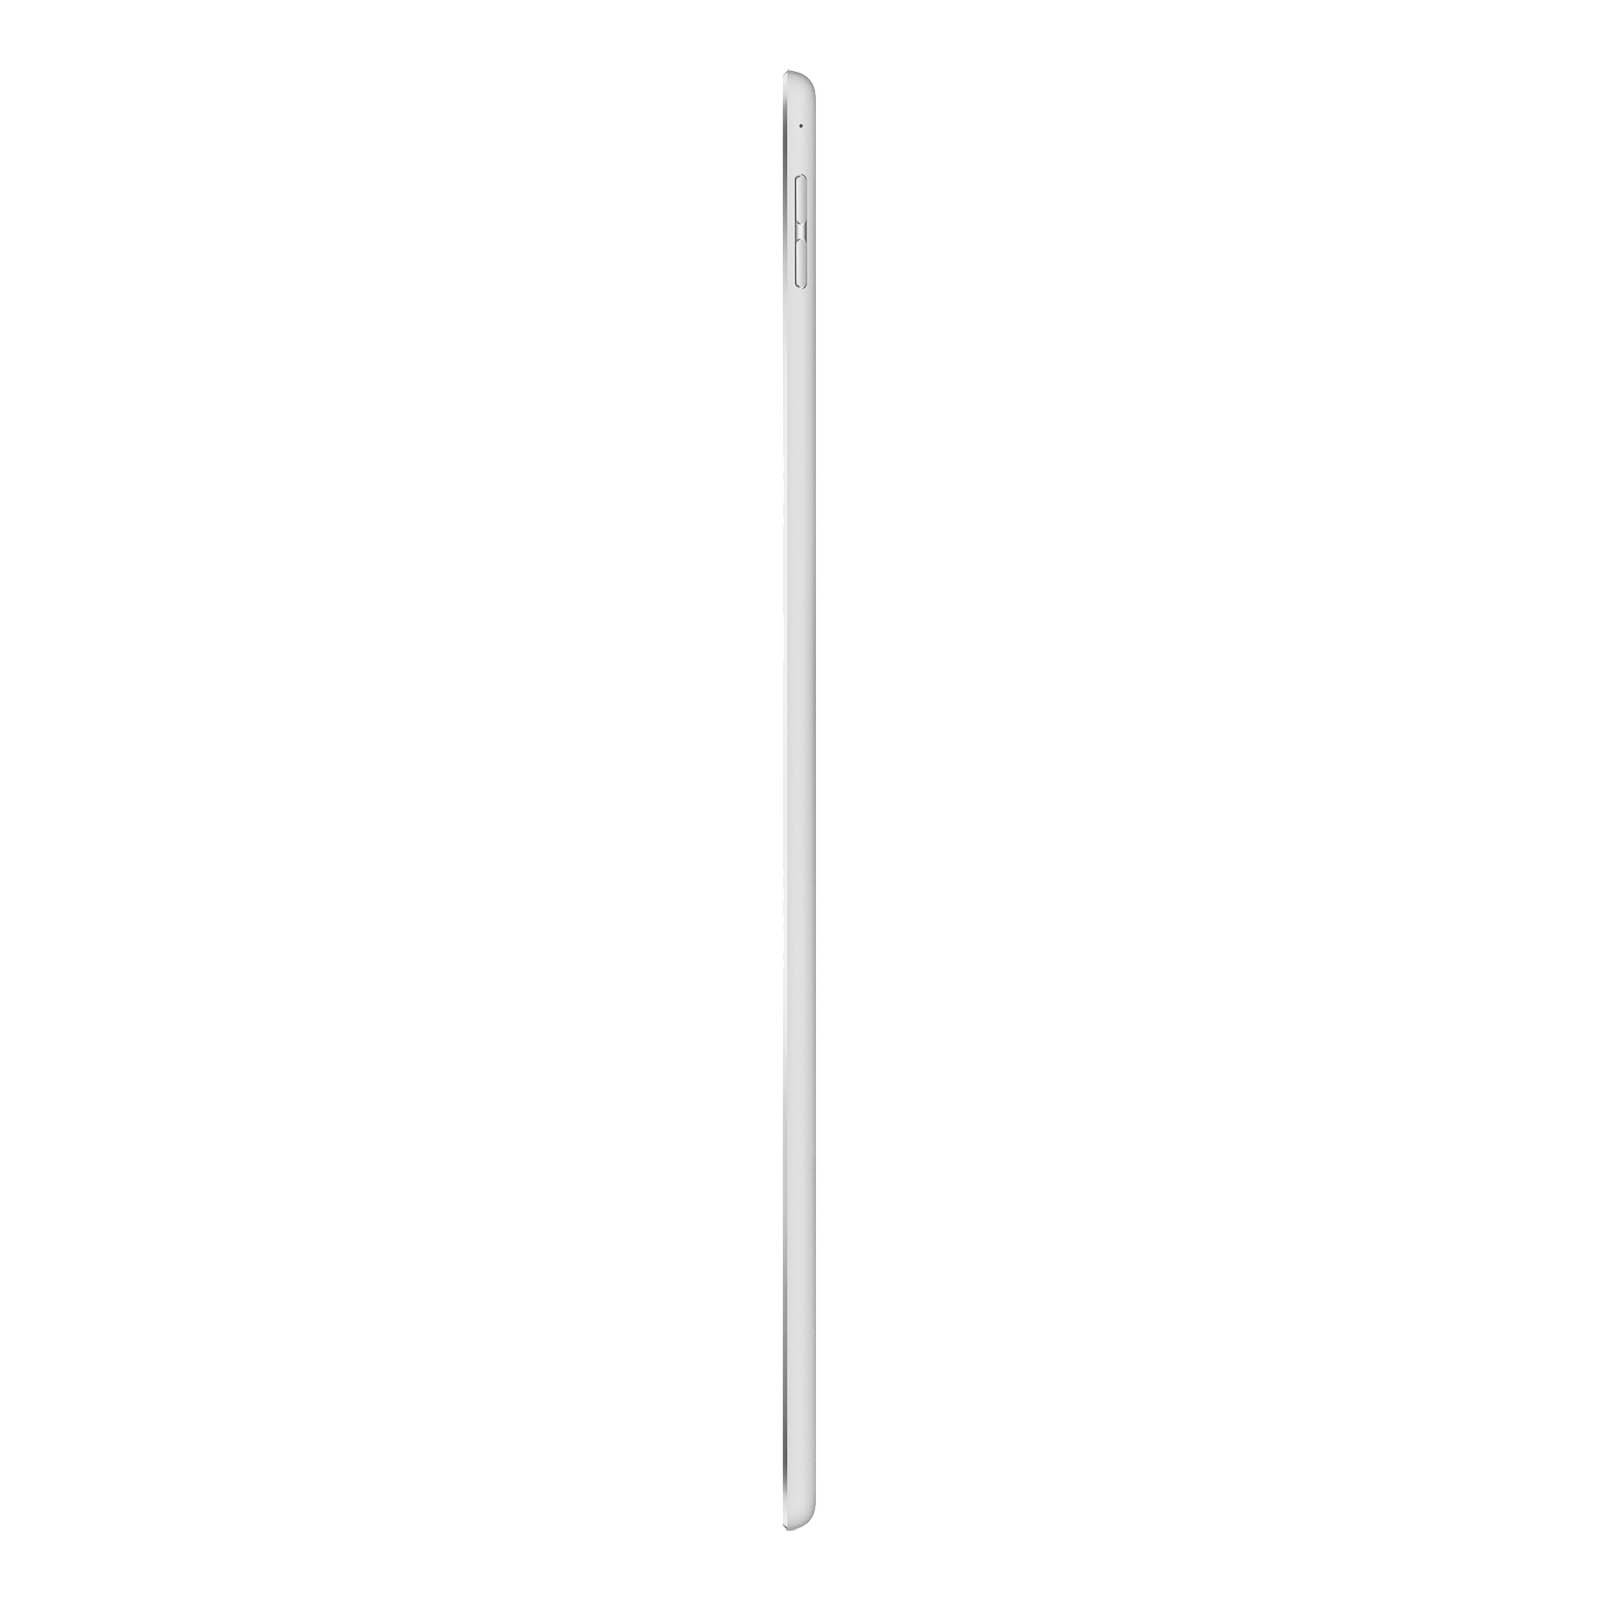 iPad Pro 12.9 Inch 2nd Gen 64GB Silver Pristine - WiFi